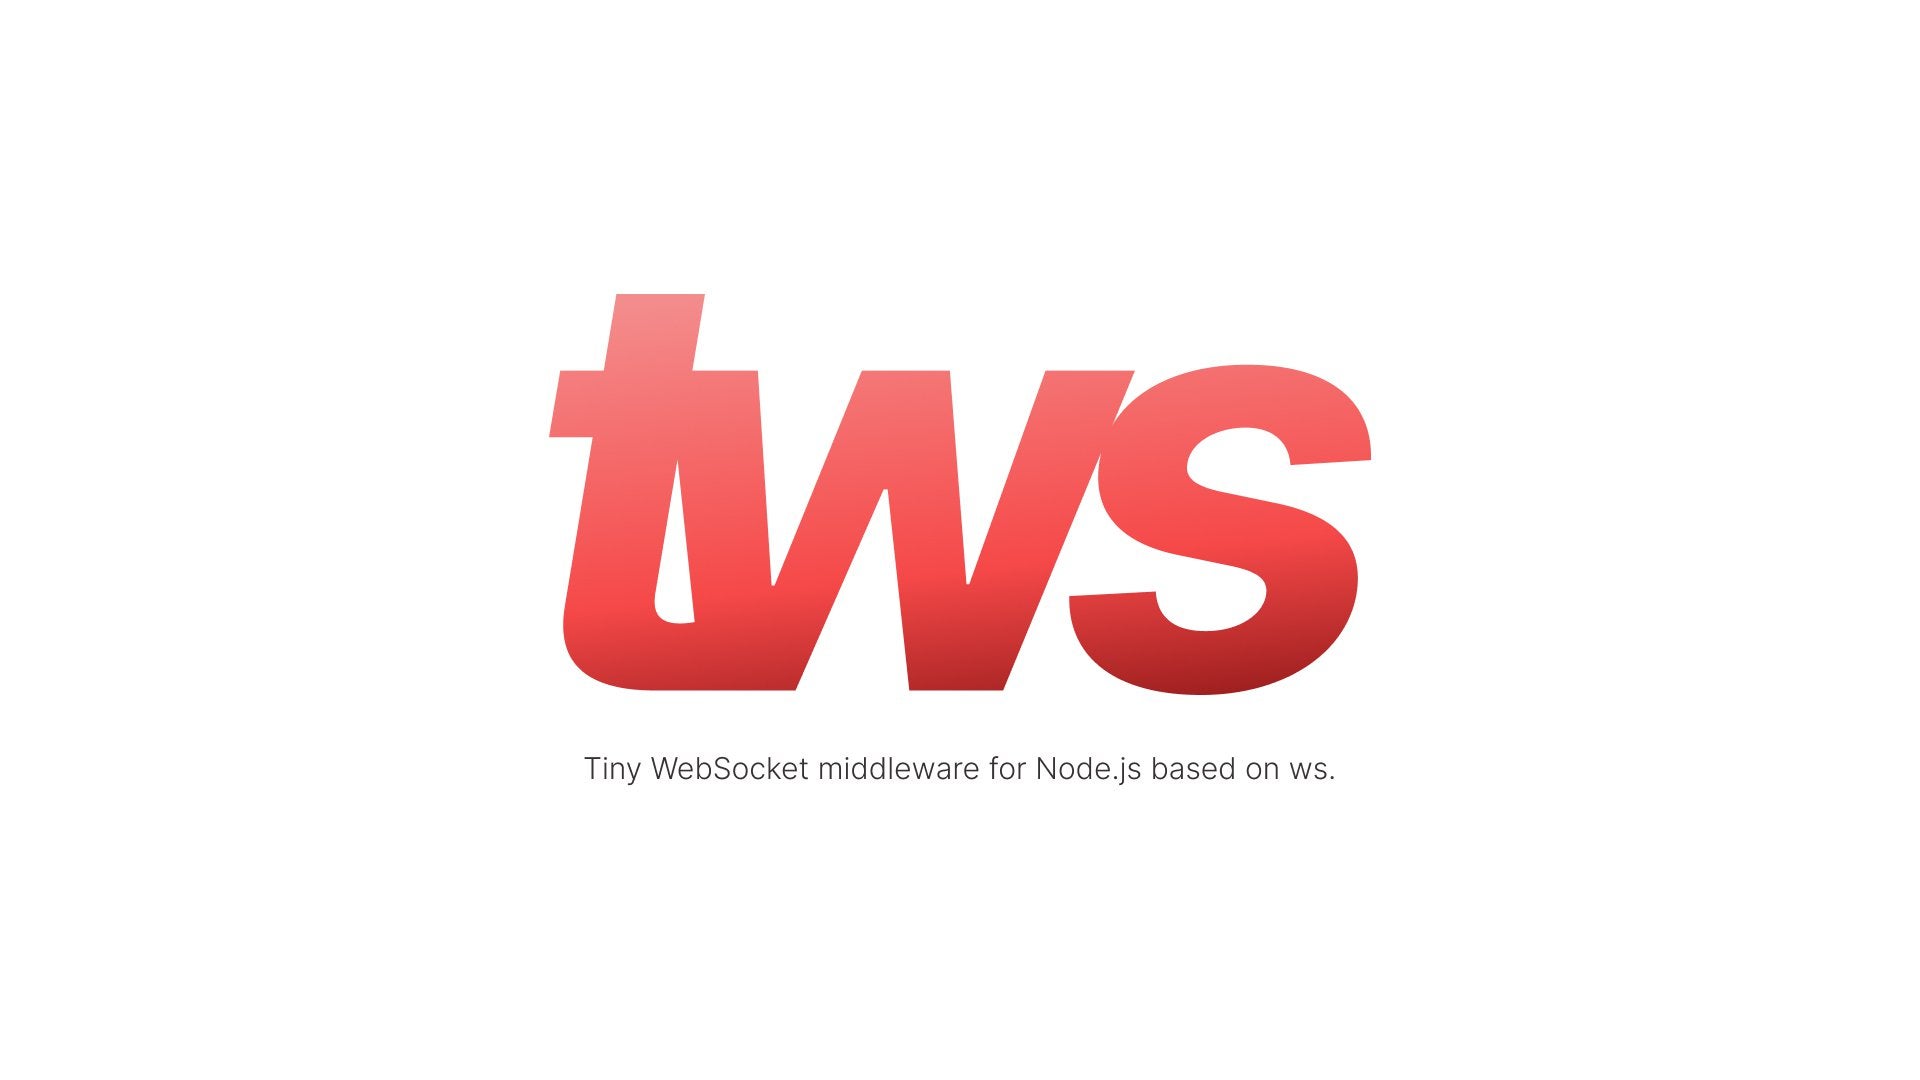 tinyws — tiny WebSocket middleware for Node.js